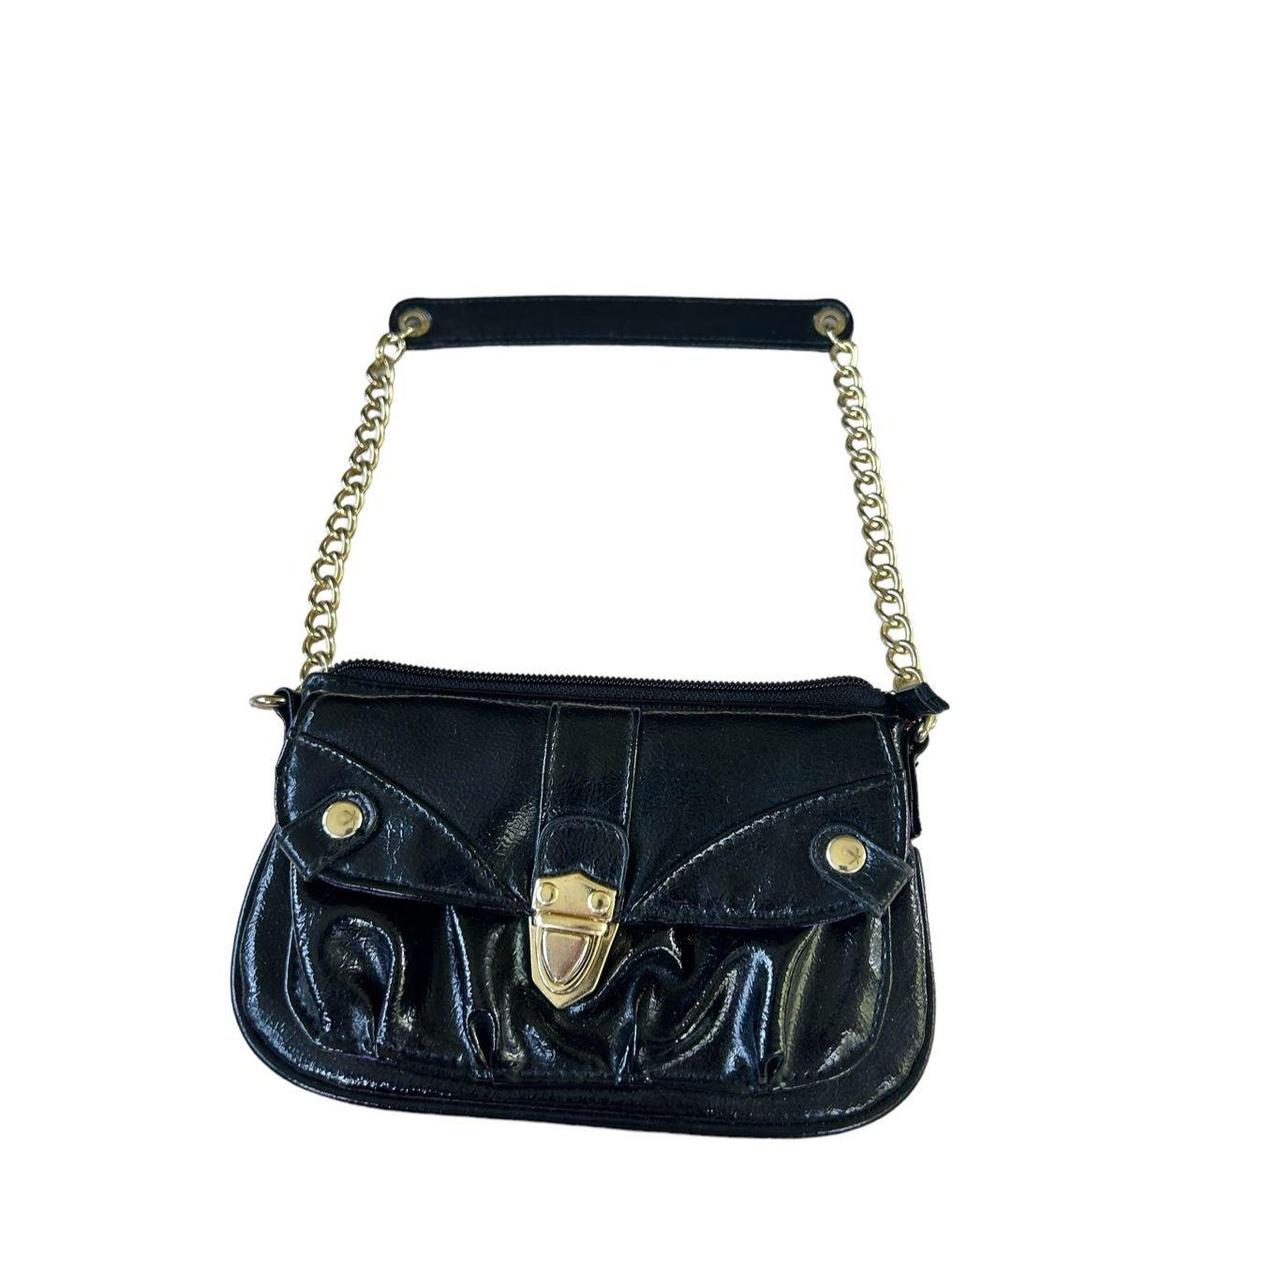 Serenade - Allura SV1-0821 Patent Leather Handbag - Black | Bags To Go